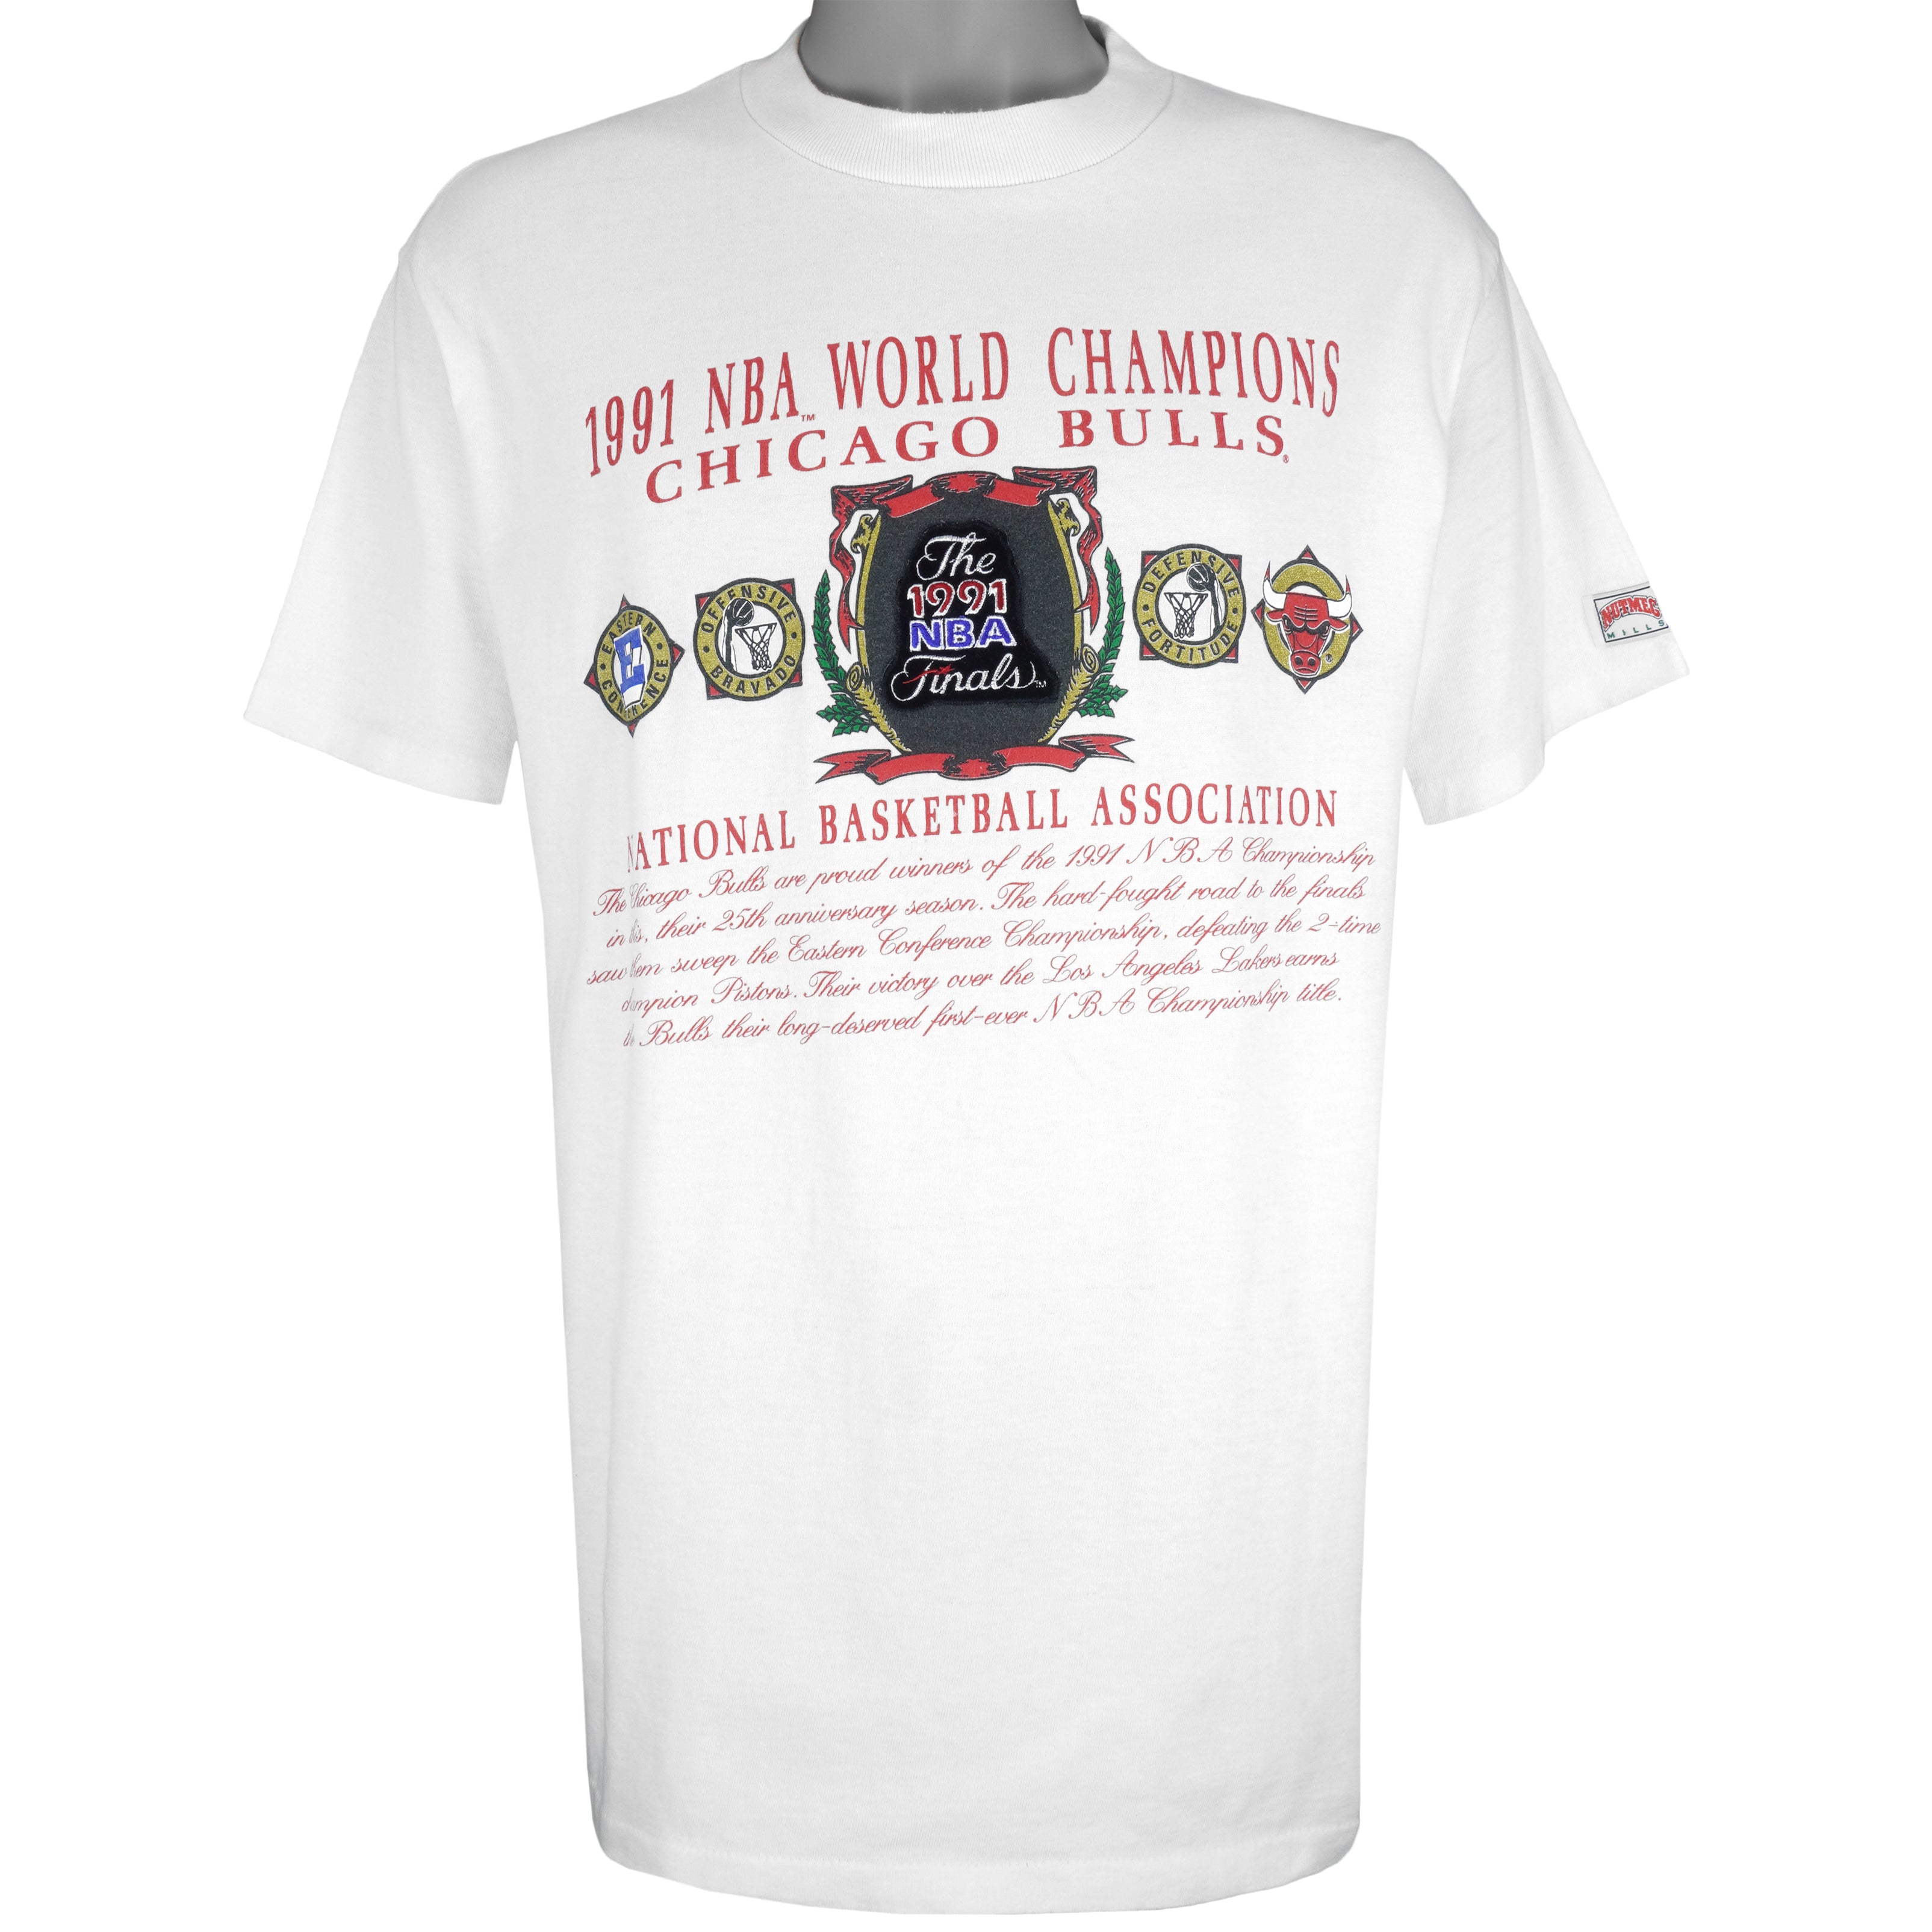 Champions Chicago Bulls 1991 Nba Finals Logo Shirt, hoodie